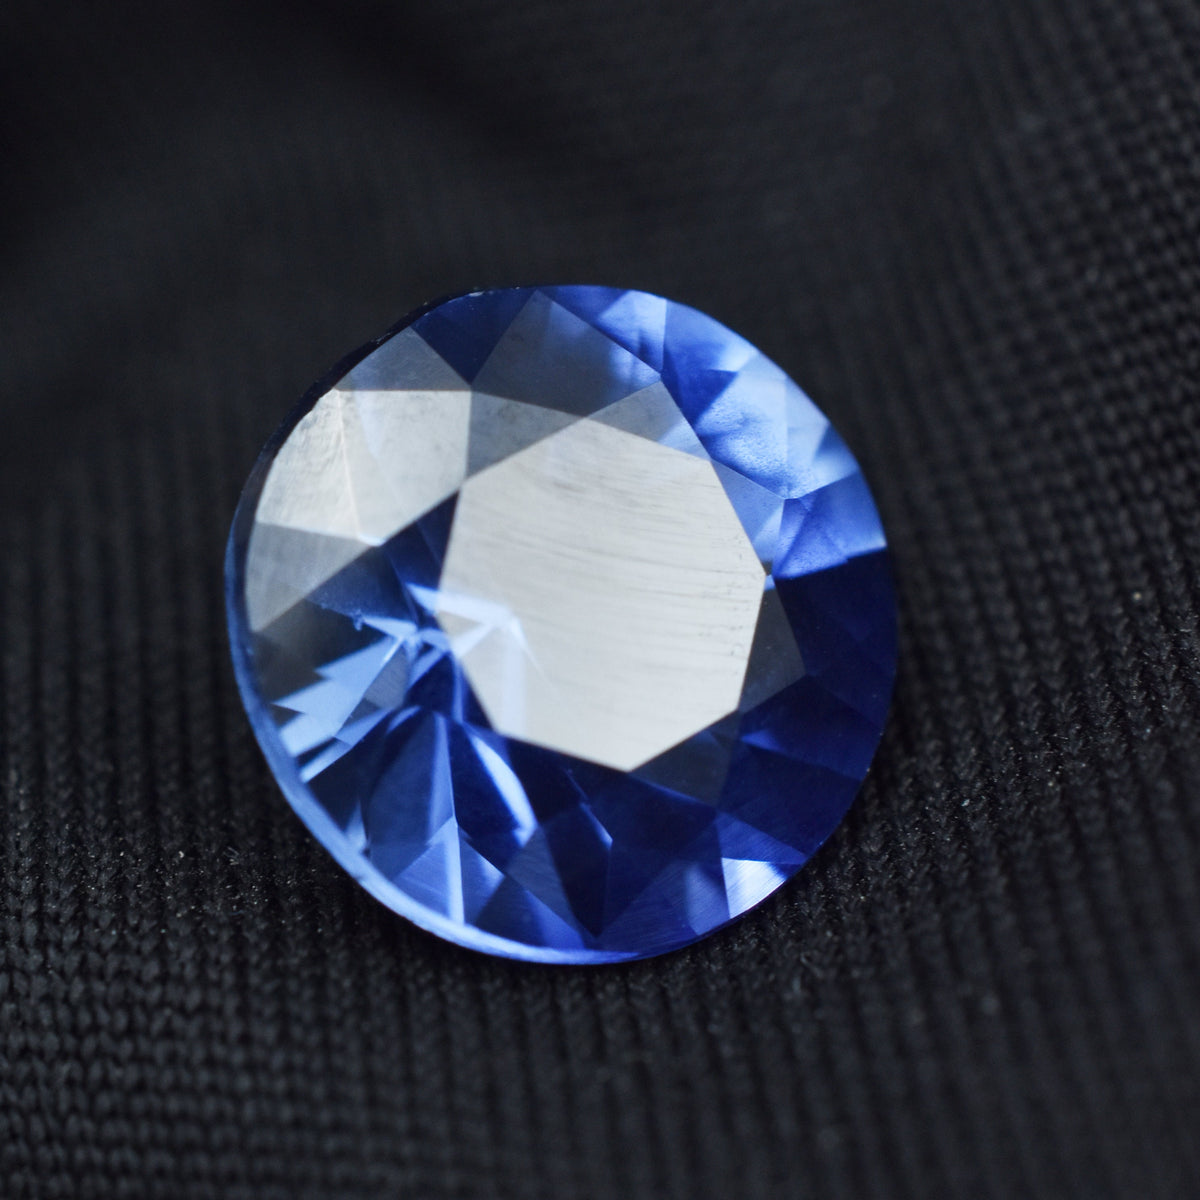 Best Certified 6.25 Carat Round Cut Blue Tanzanite Natural Certified Loose Gemstone Jewelry Making Gemstone